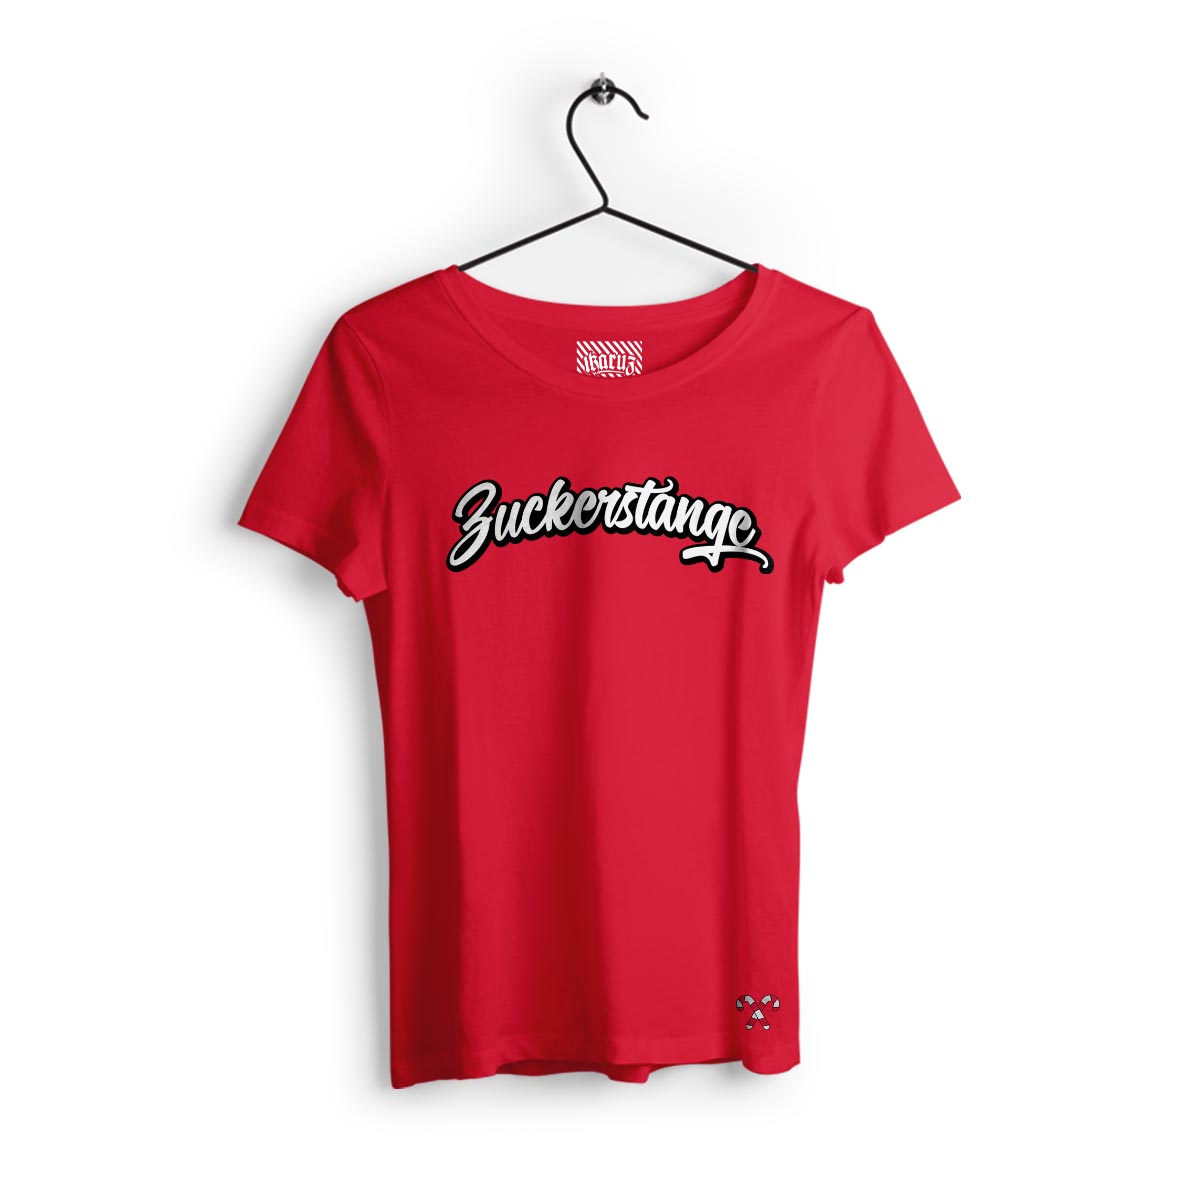 Ikrz | Zuckerstange | Women Red Shirt - Ikaruz